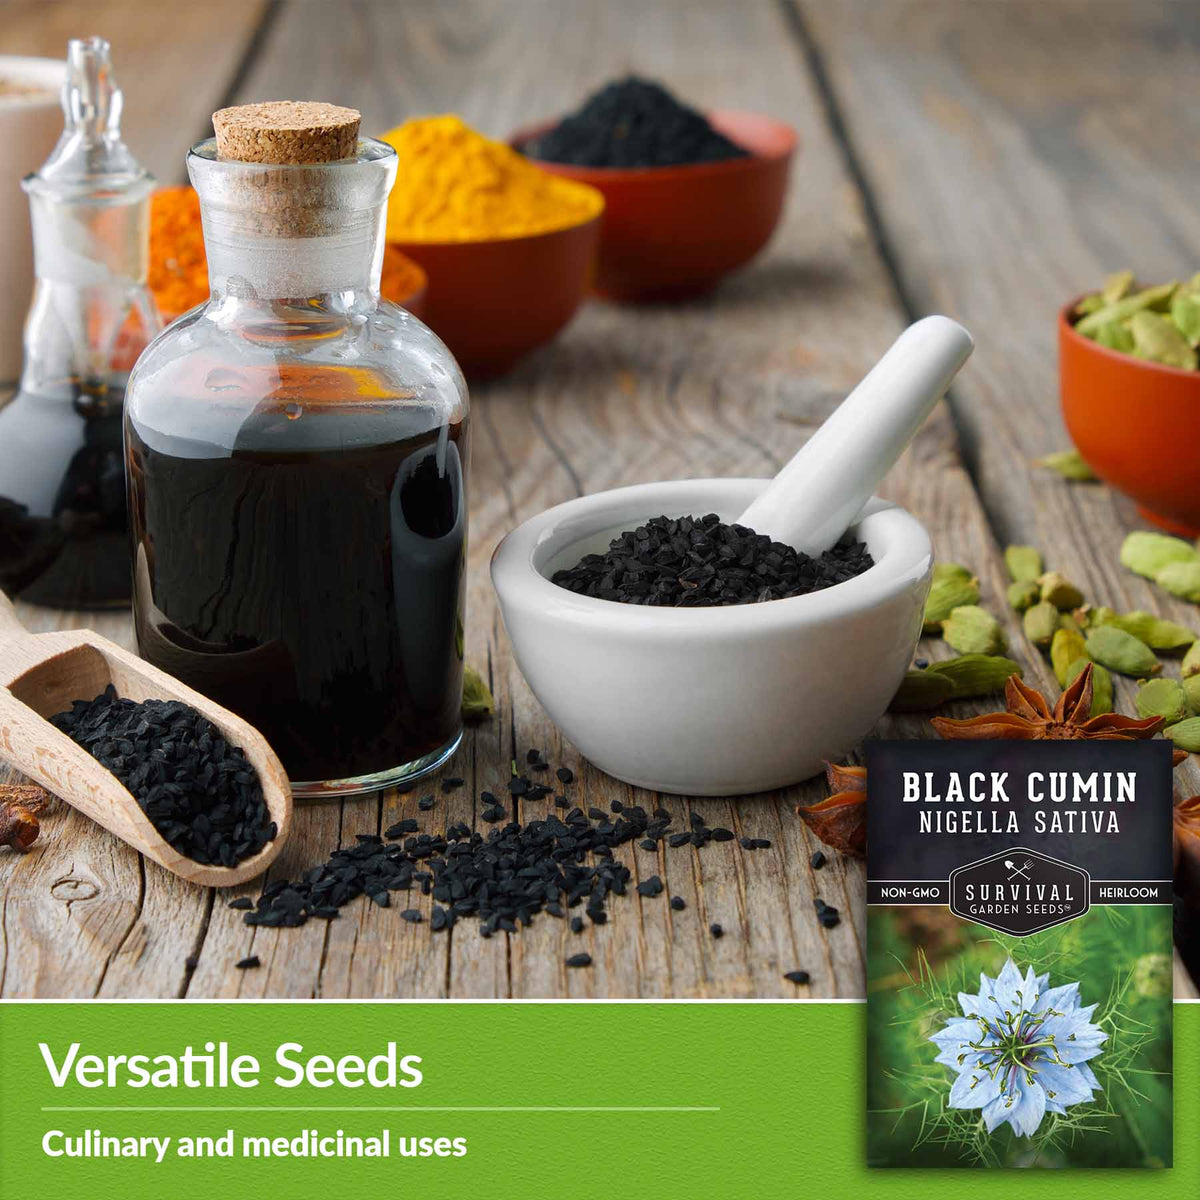 Versatile seeds - culinary and medicinal uses